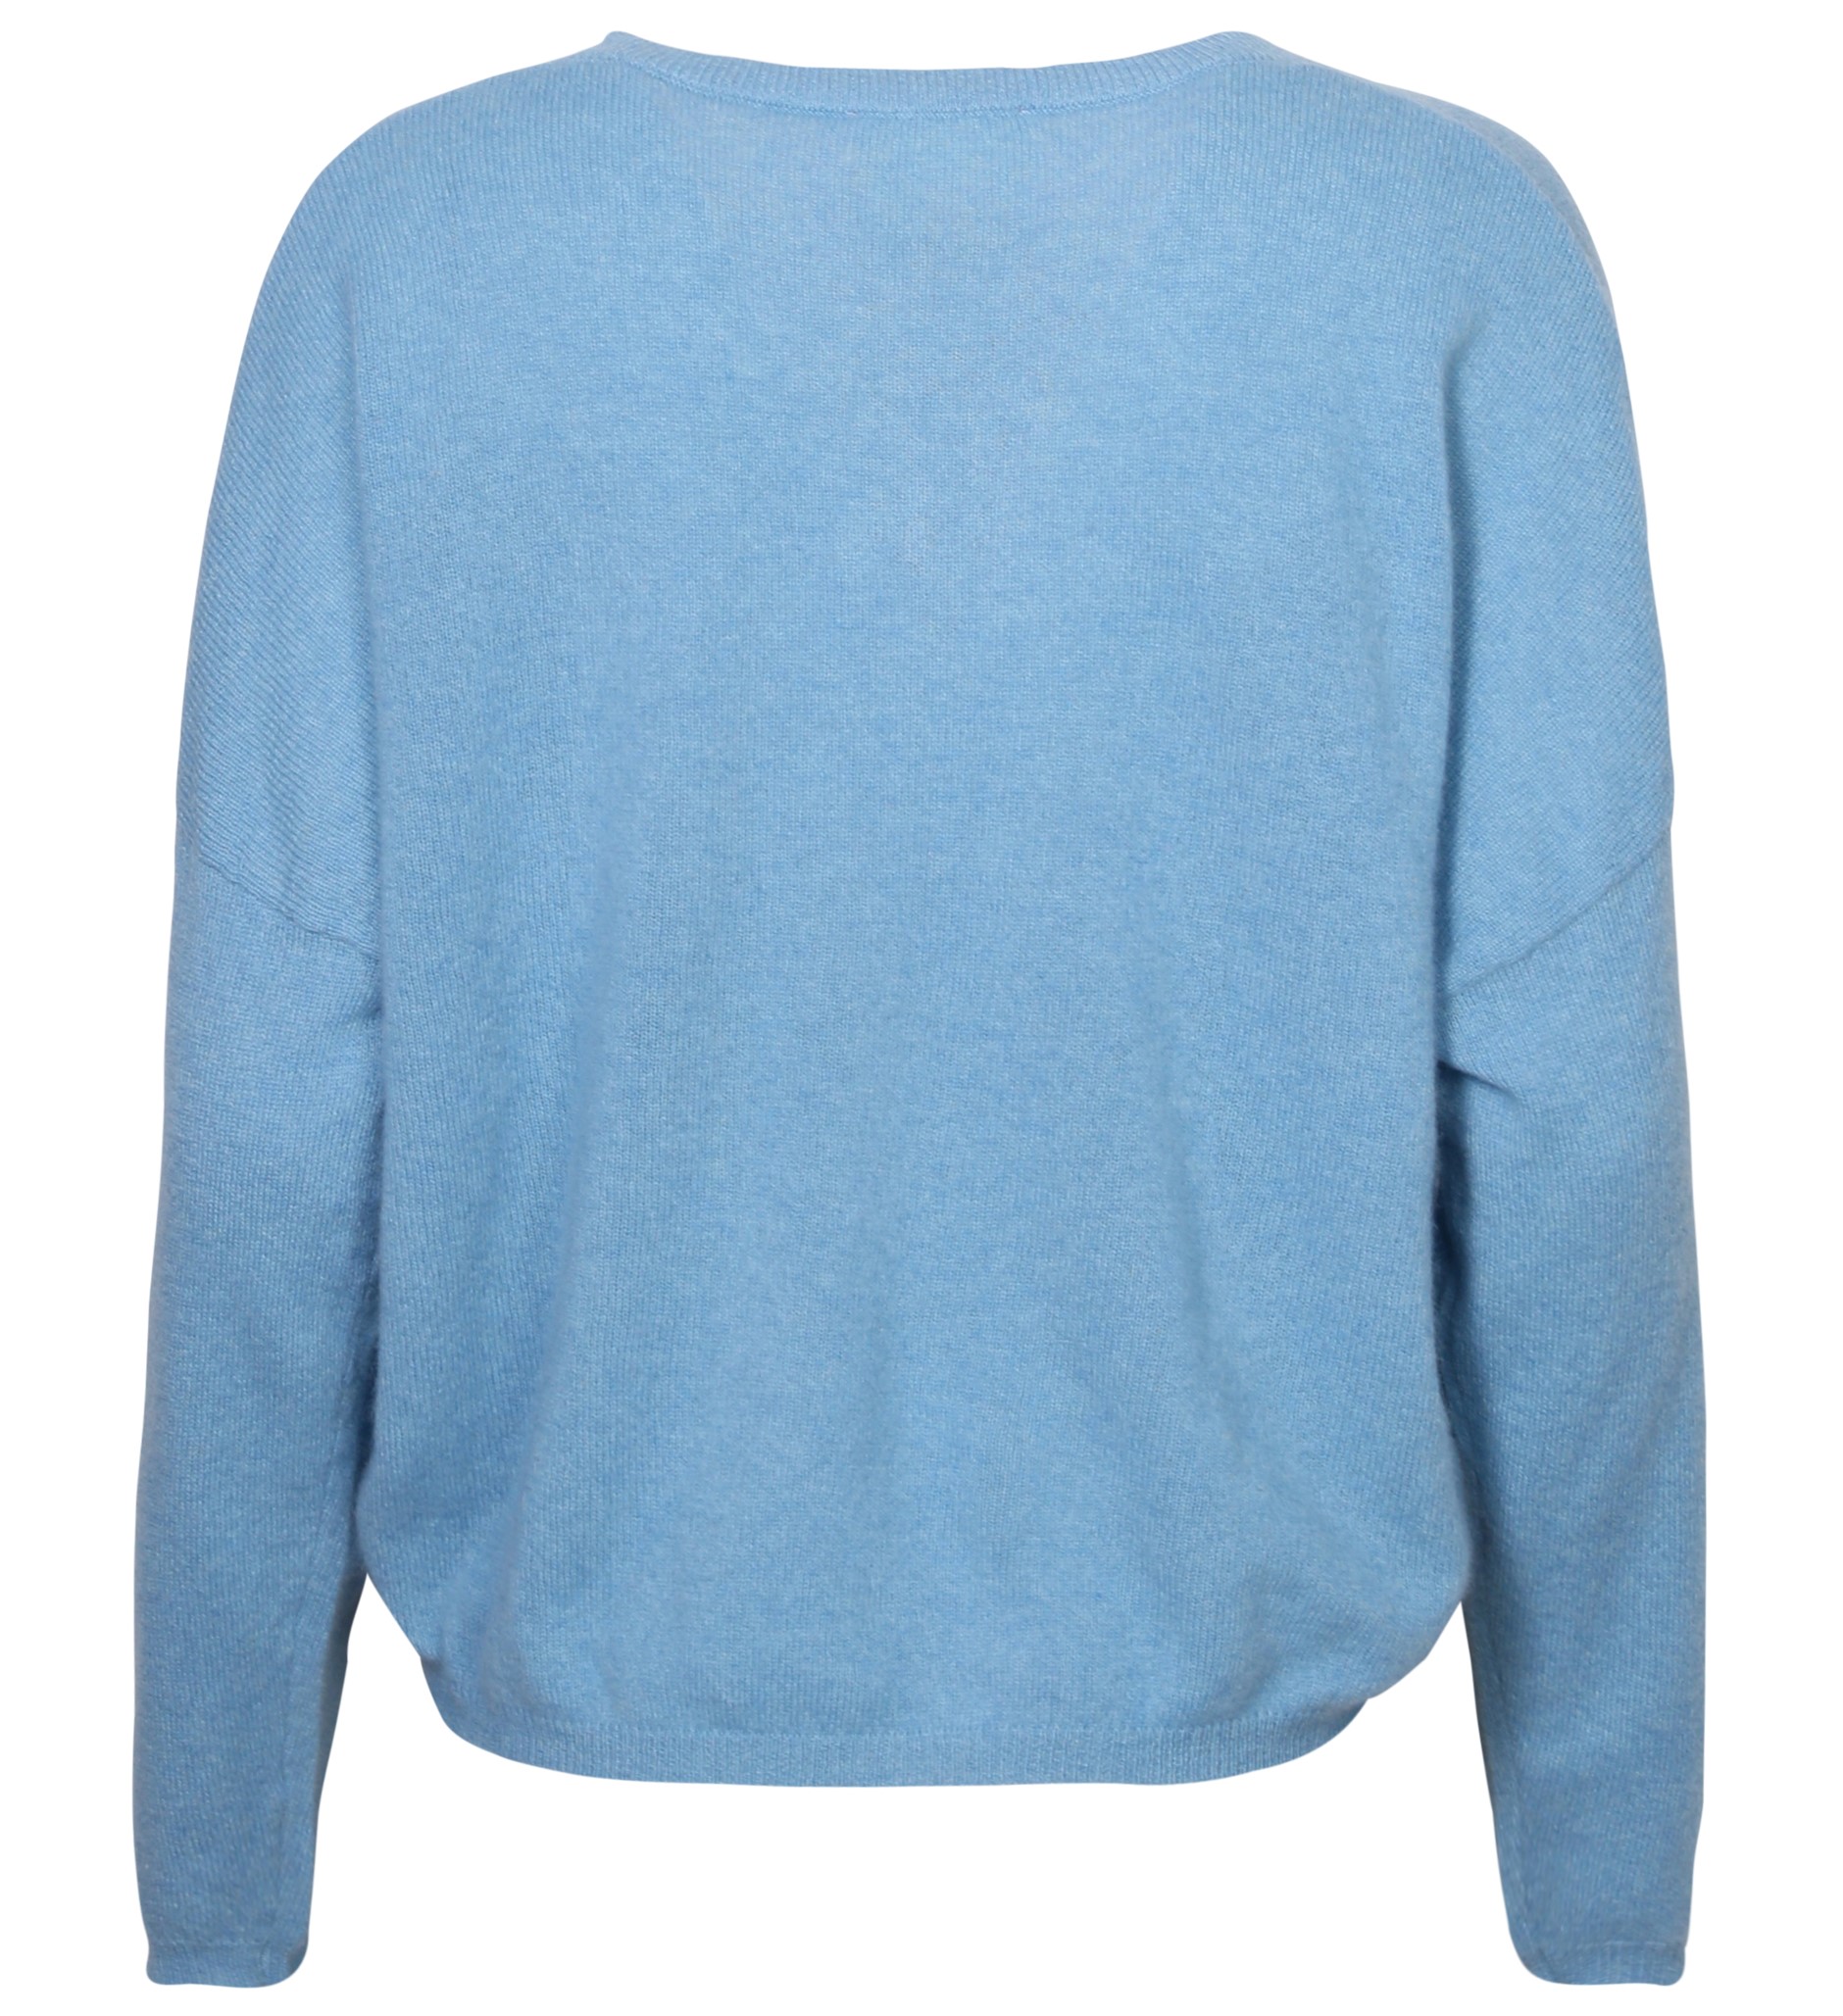 ABSOLUT CASHMERE V-Neck Sweater Alicia in Blue L